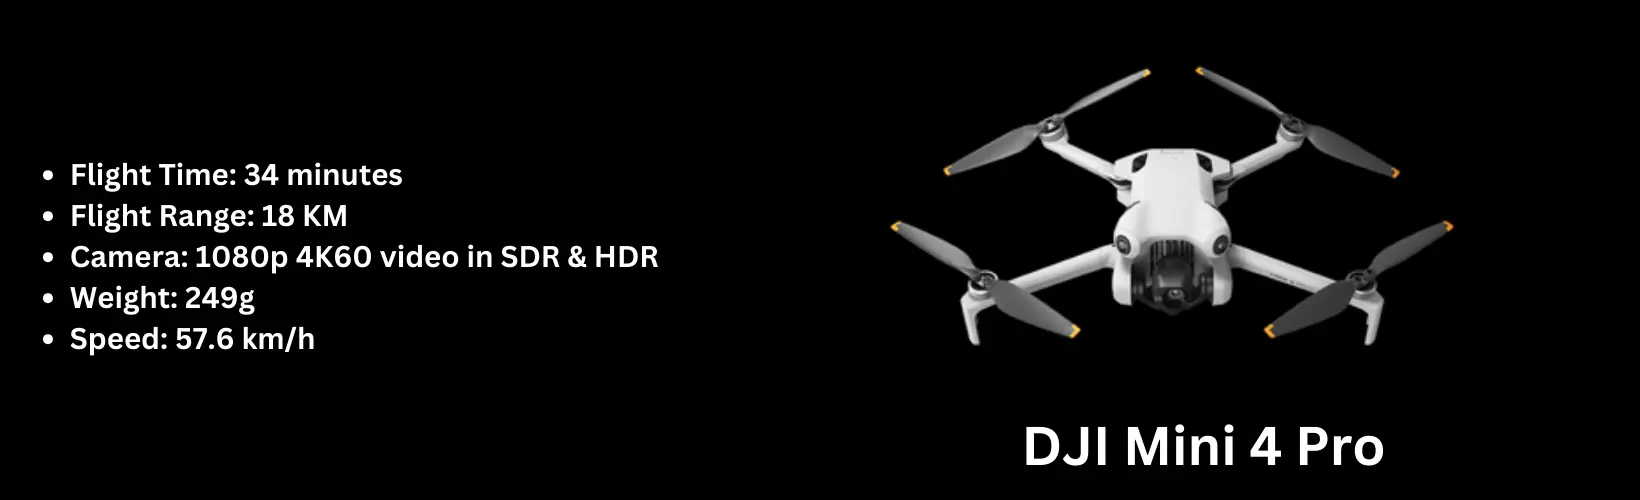 DJI-Mini-4-Pro-specifications